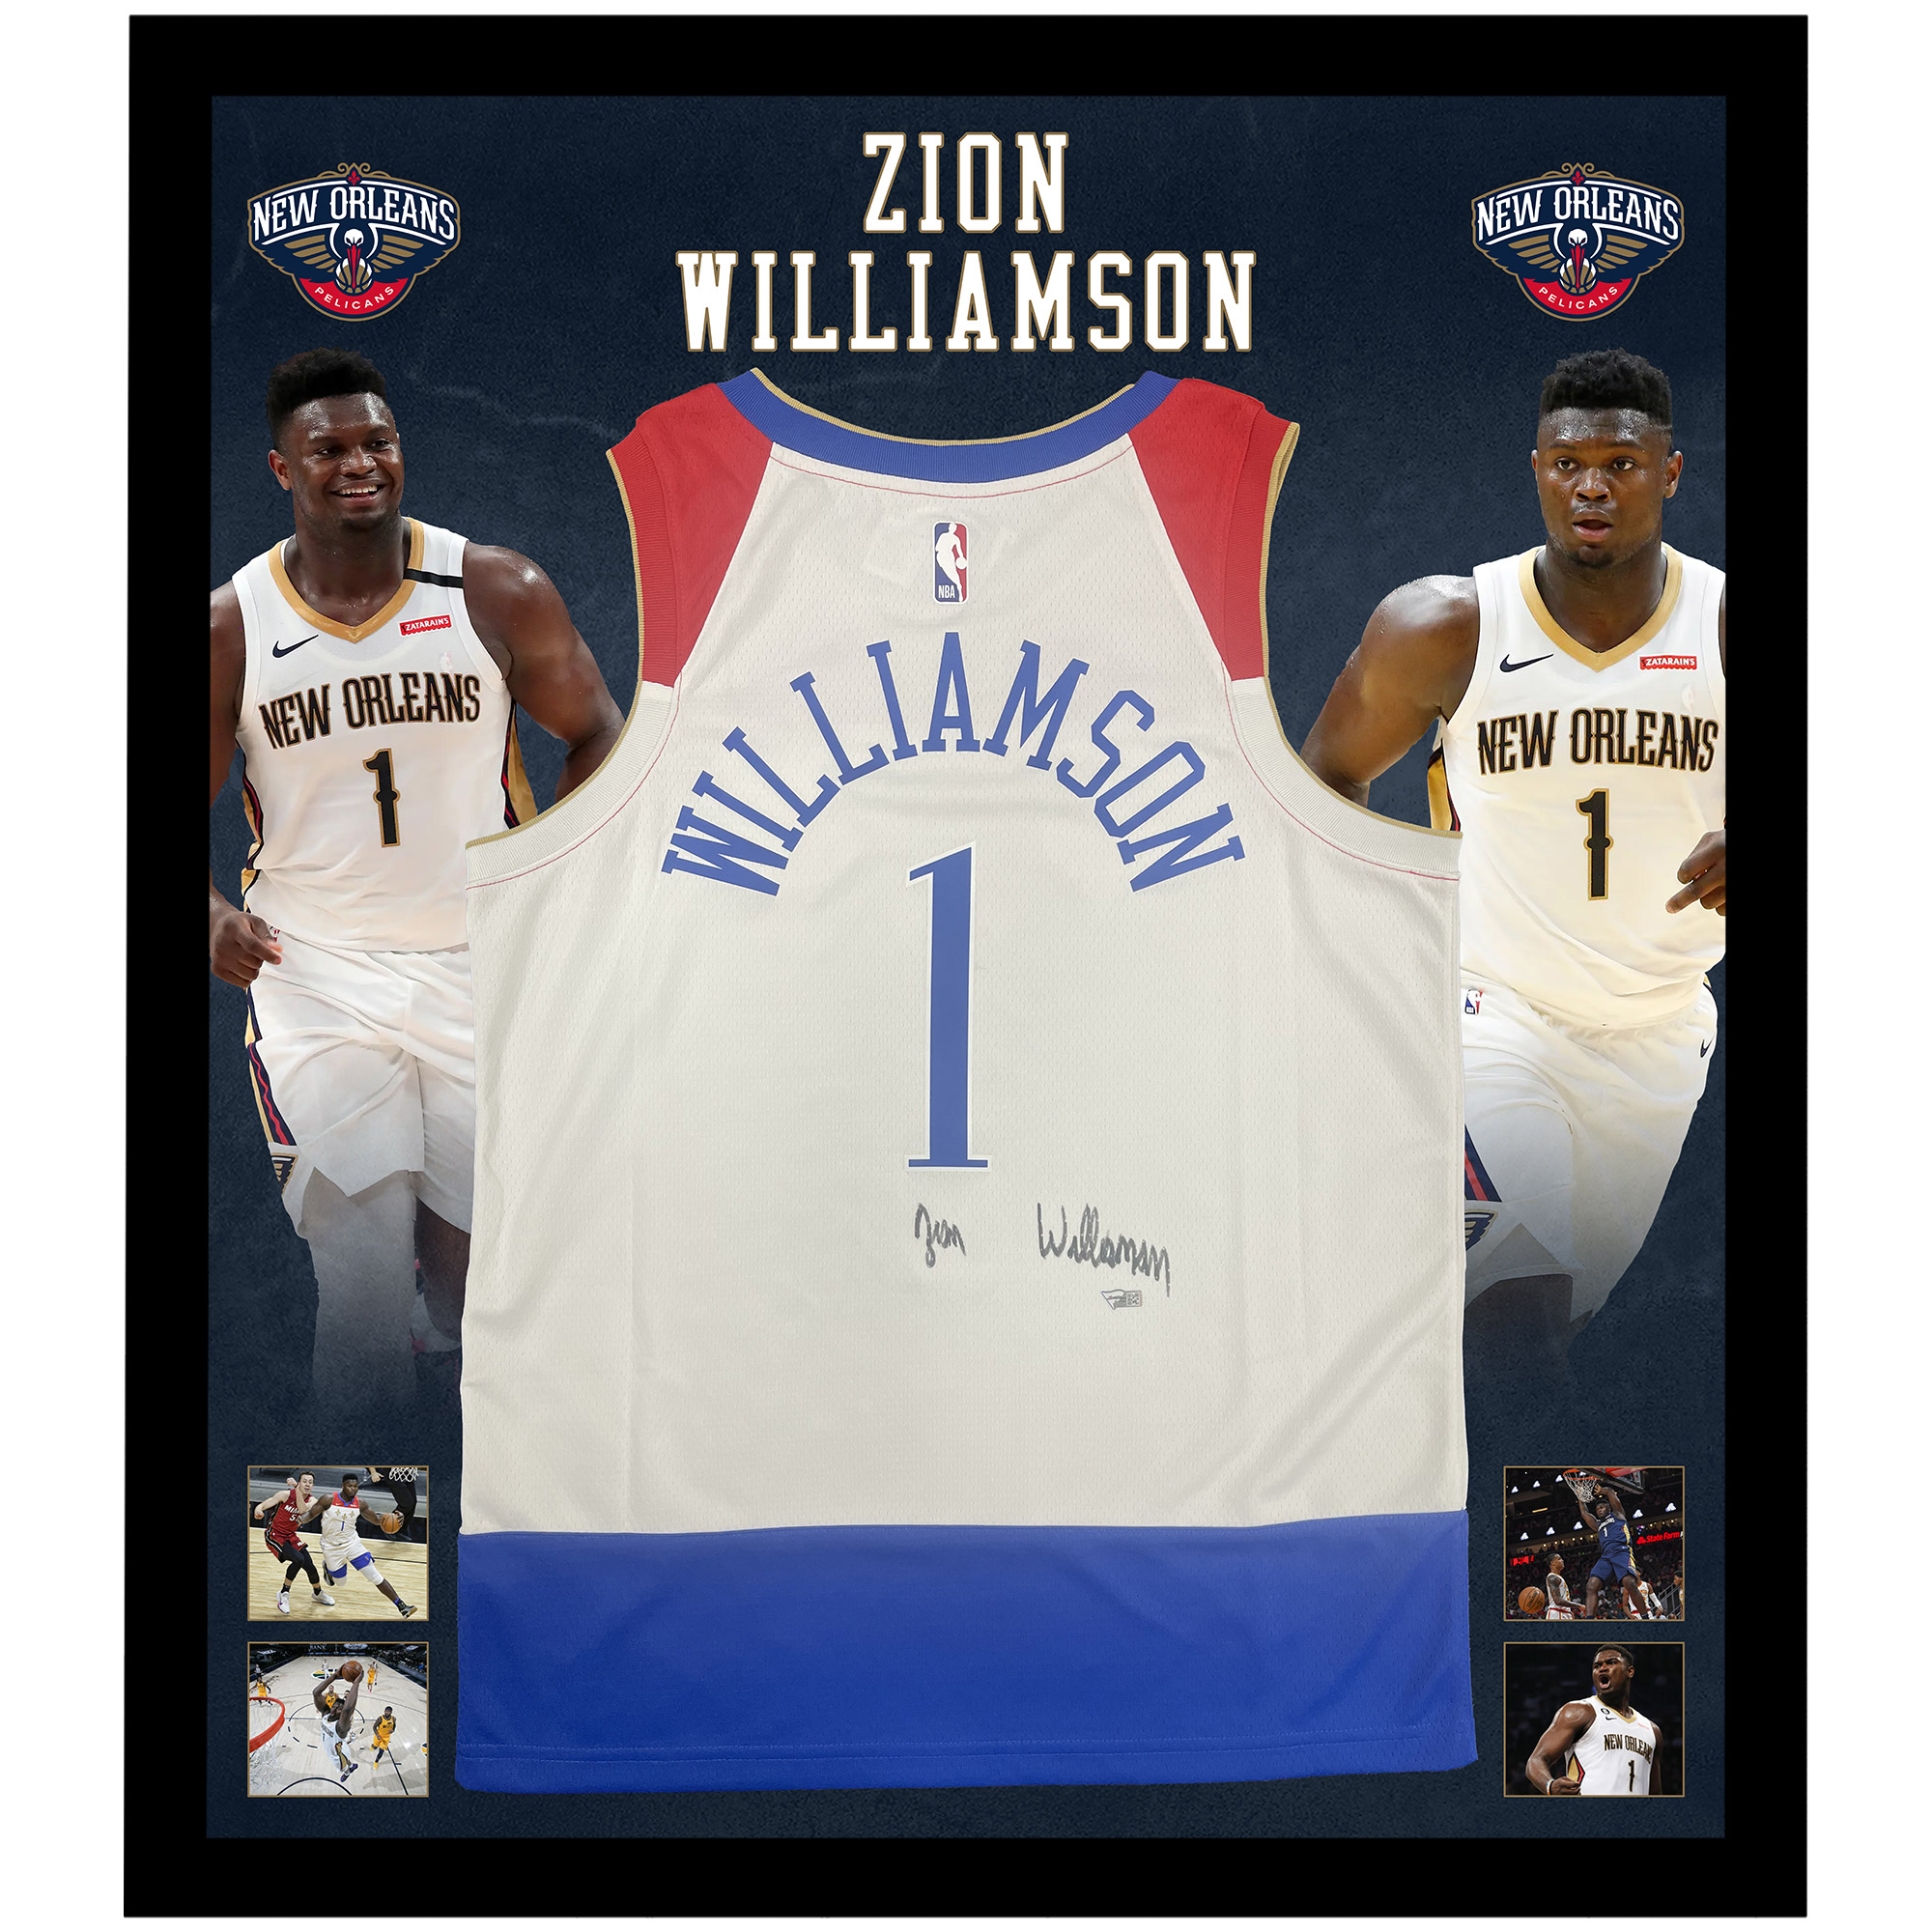 zion williamson jersey cheap